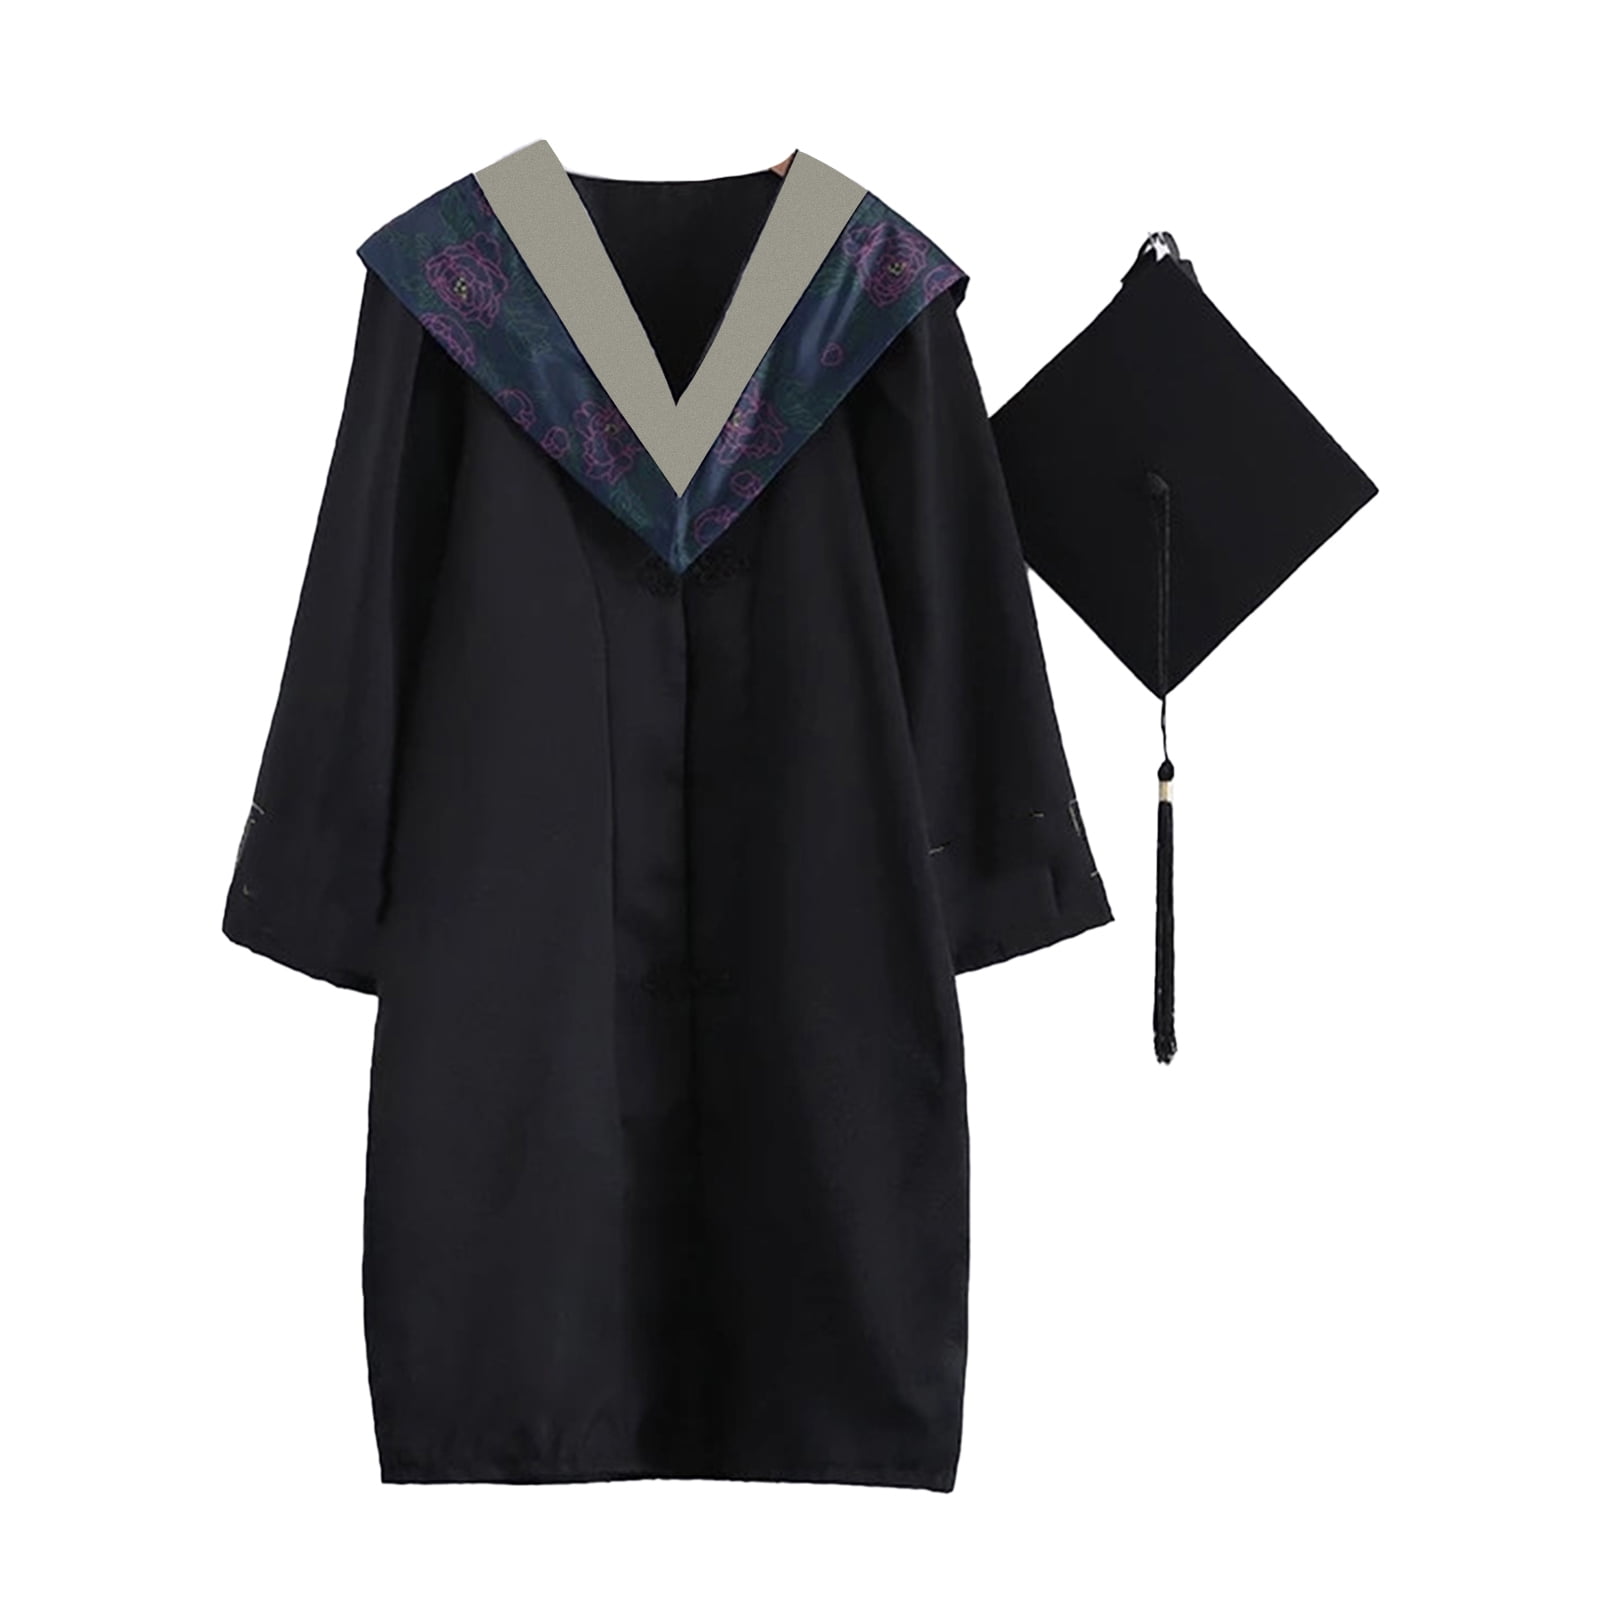 Shop: Classy Graduation Dresses To Wear Under Your Toga